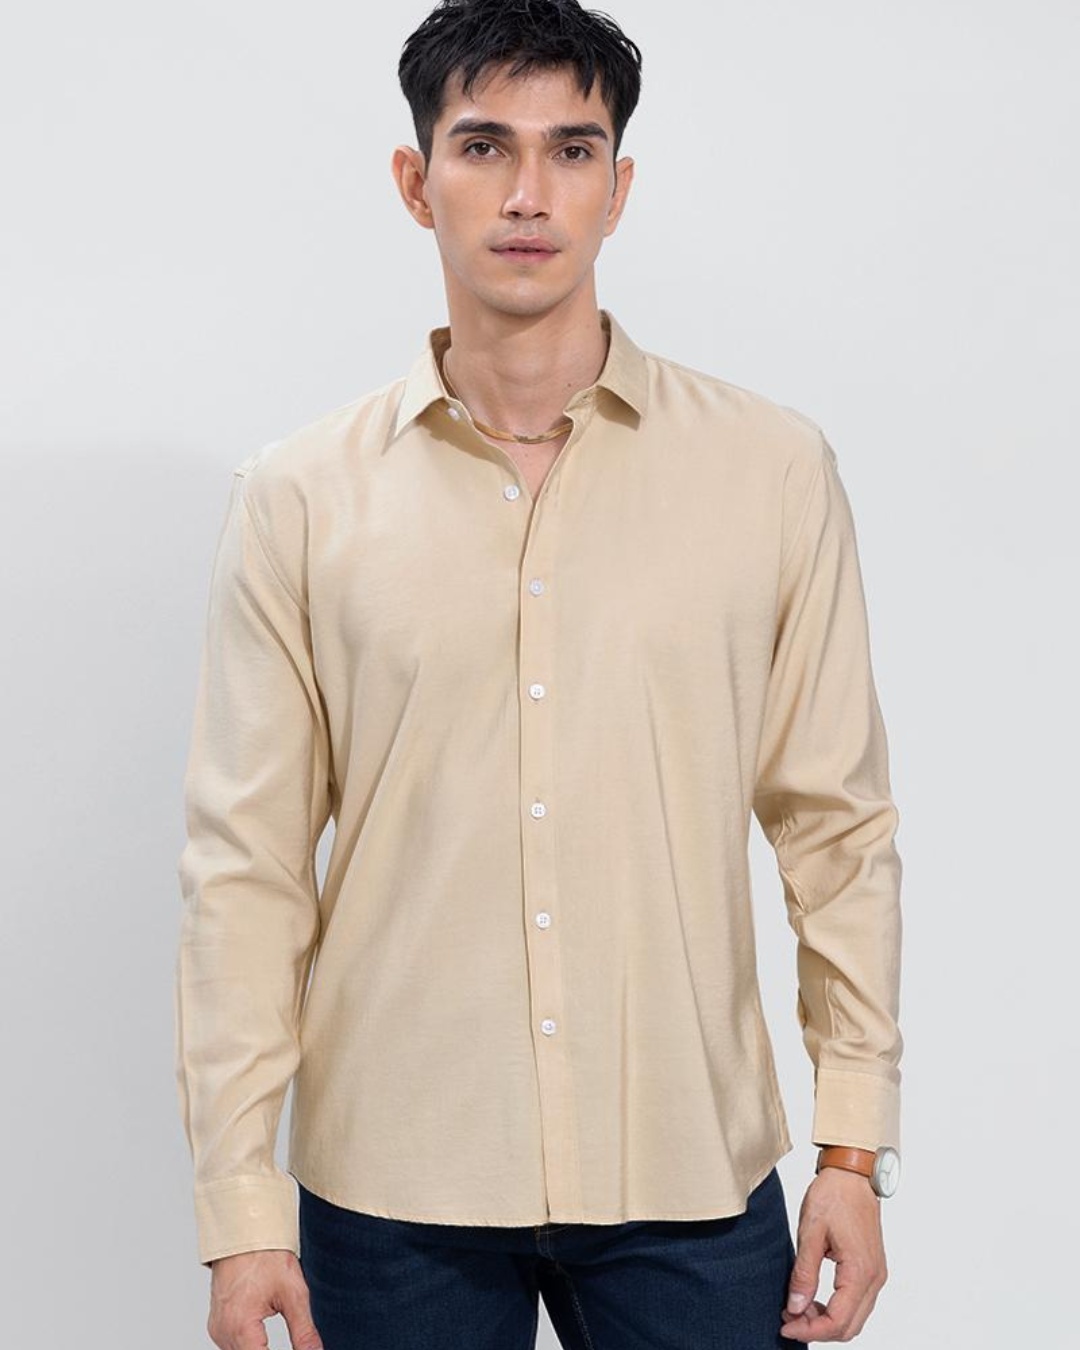 HUILISHI Long Sleeve Formal/Business Polo for Men Plain Cotton 7